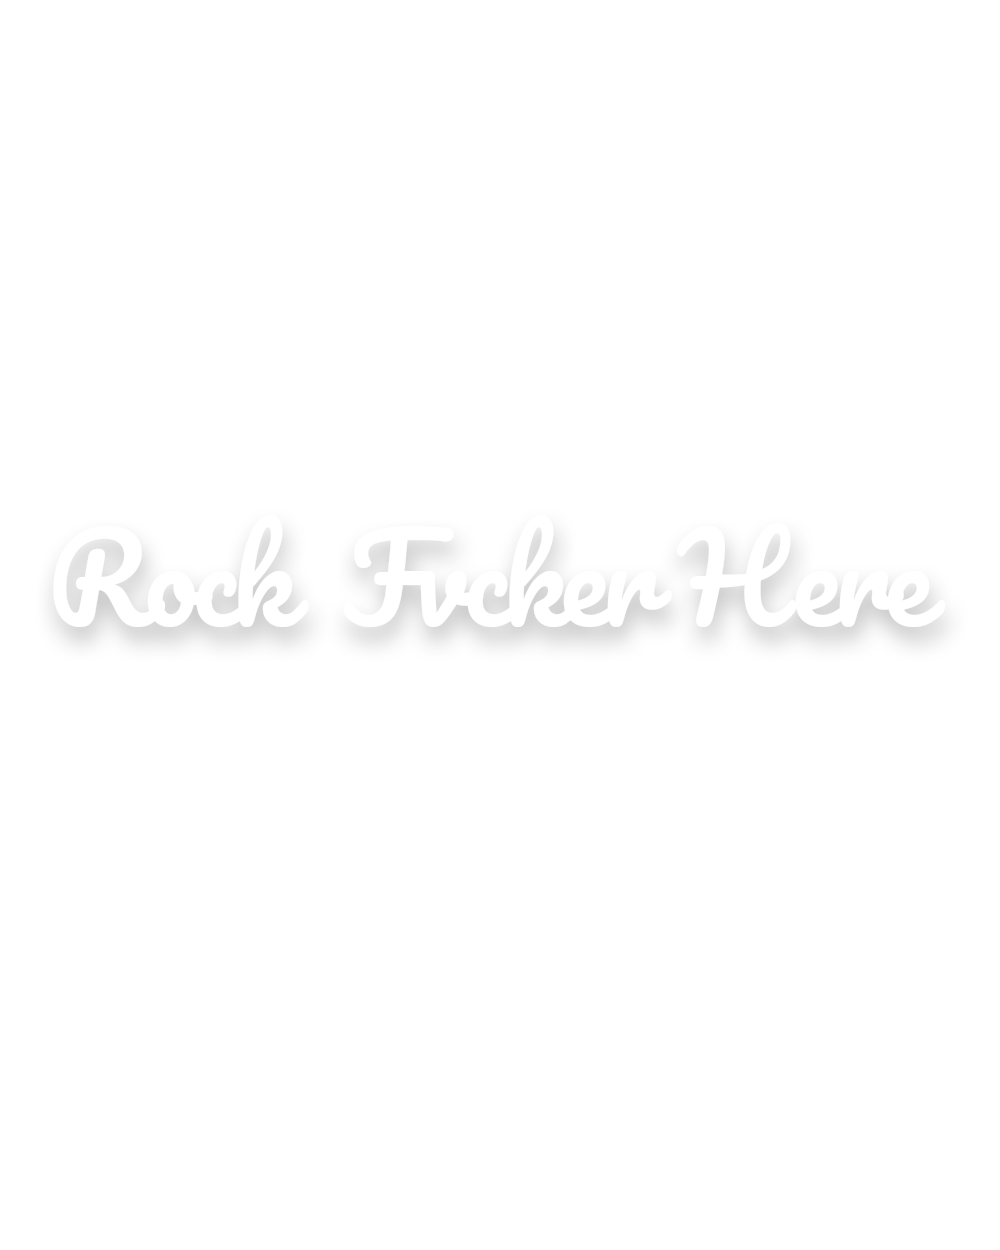 Rock Fvcker Here Vinyl Lettering